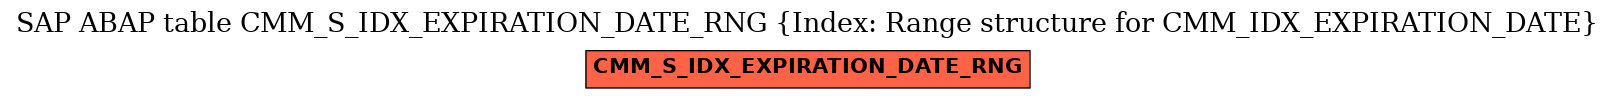 E-R Diagram for table CMM_S_IDX_EXPIRATION_DATE_RNG (Index: Range structure for CMM_IDX_EXPIRATION_DATE)